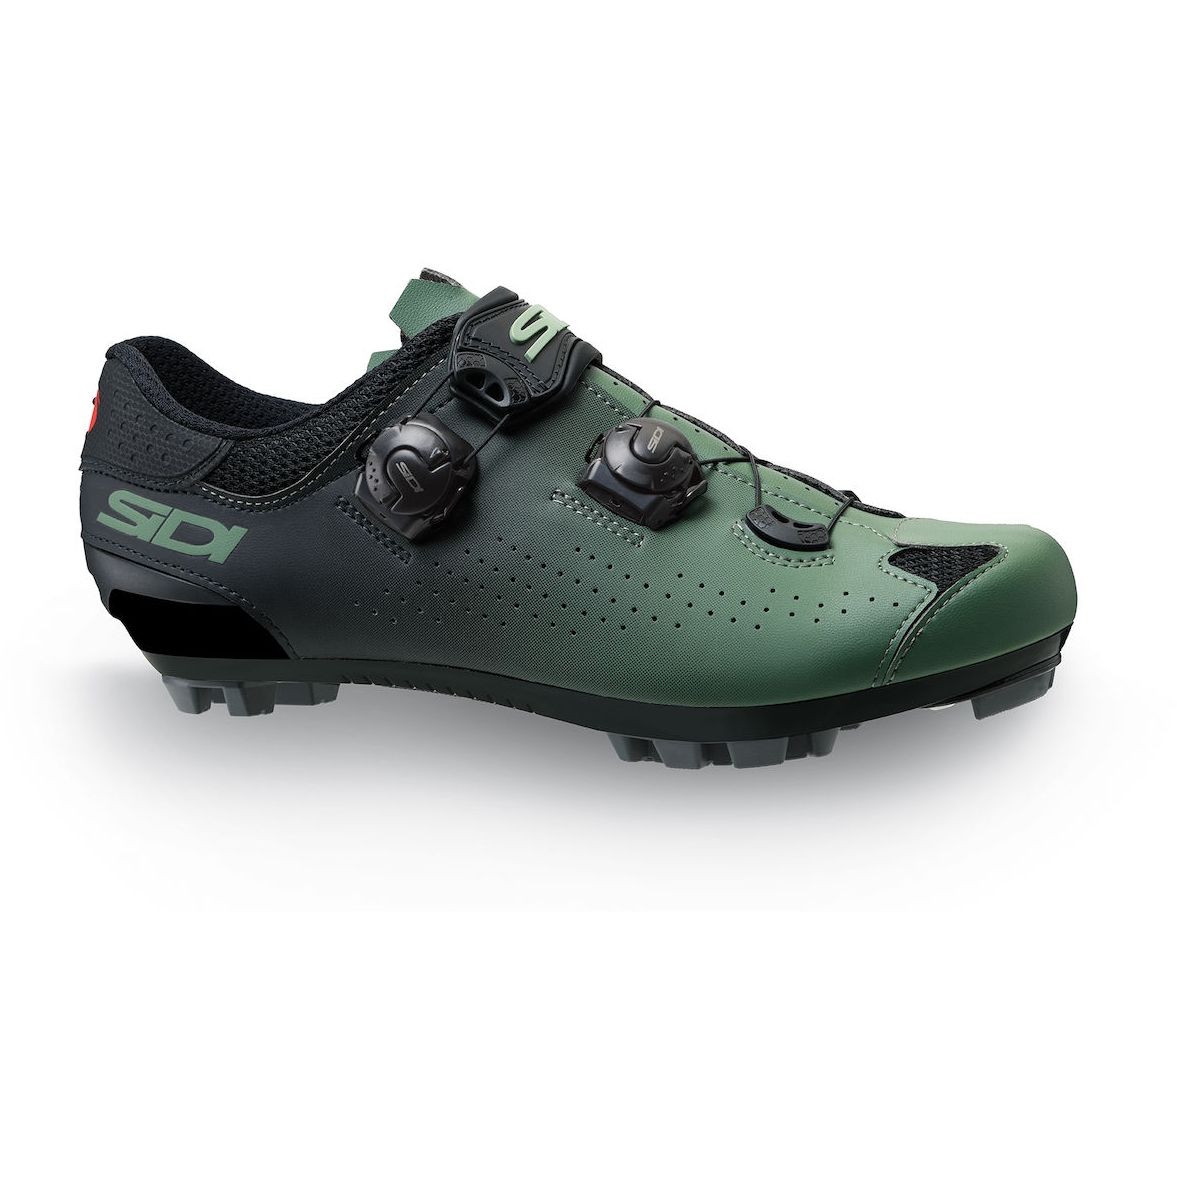 Image of Sidi Eagle 10 MTB Shoes Men - Green/Black